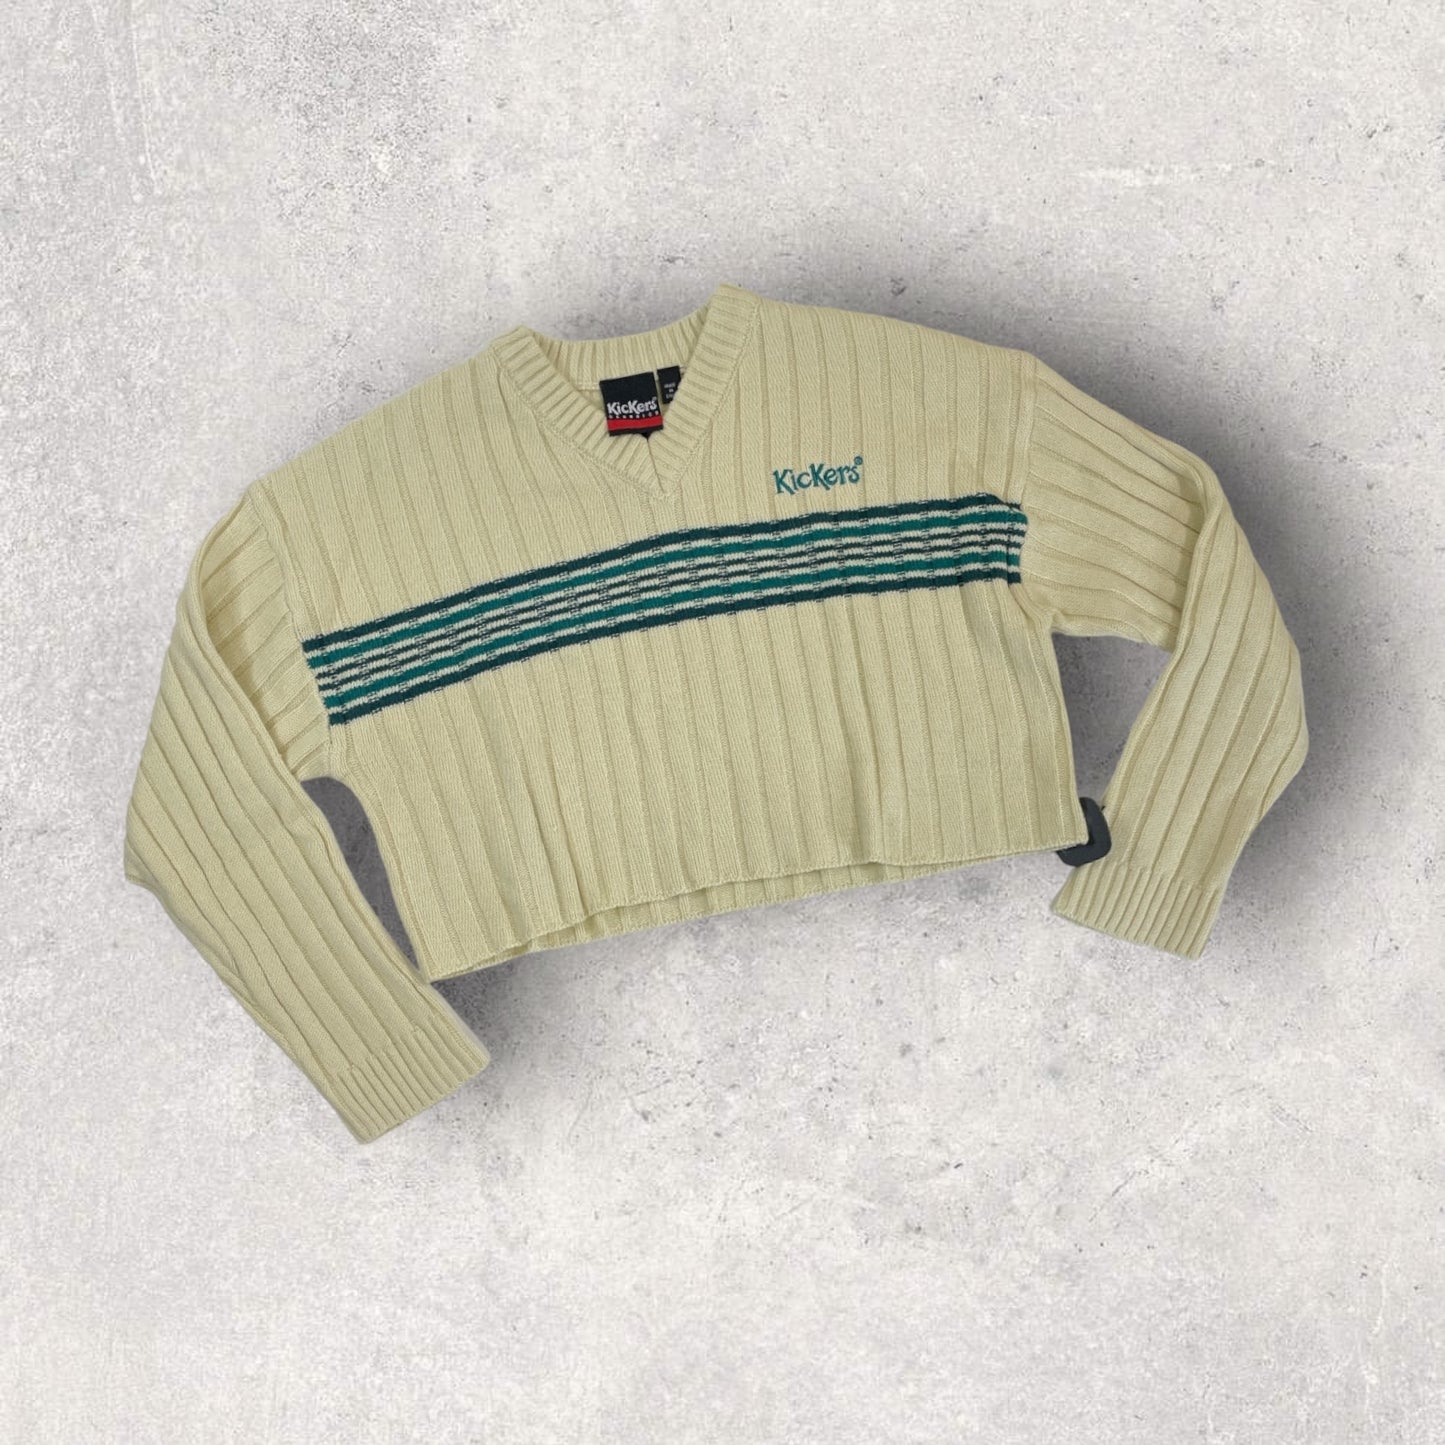 Sweater By KICKERS  Size: Xs